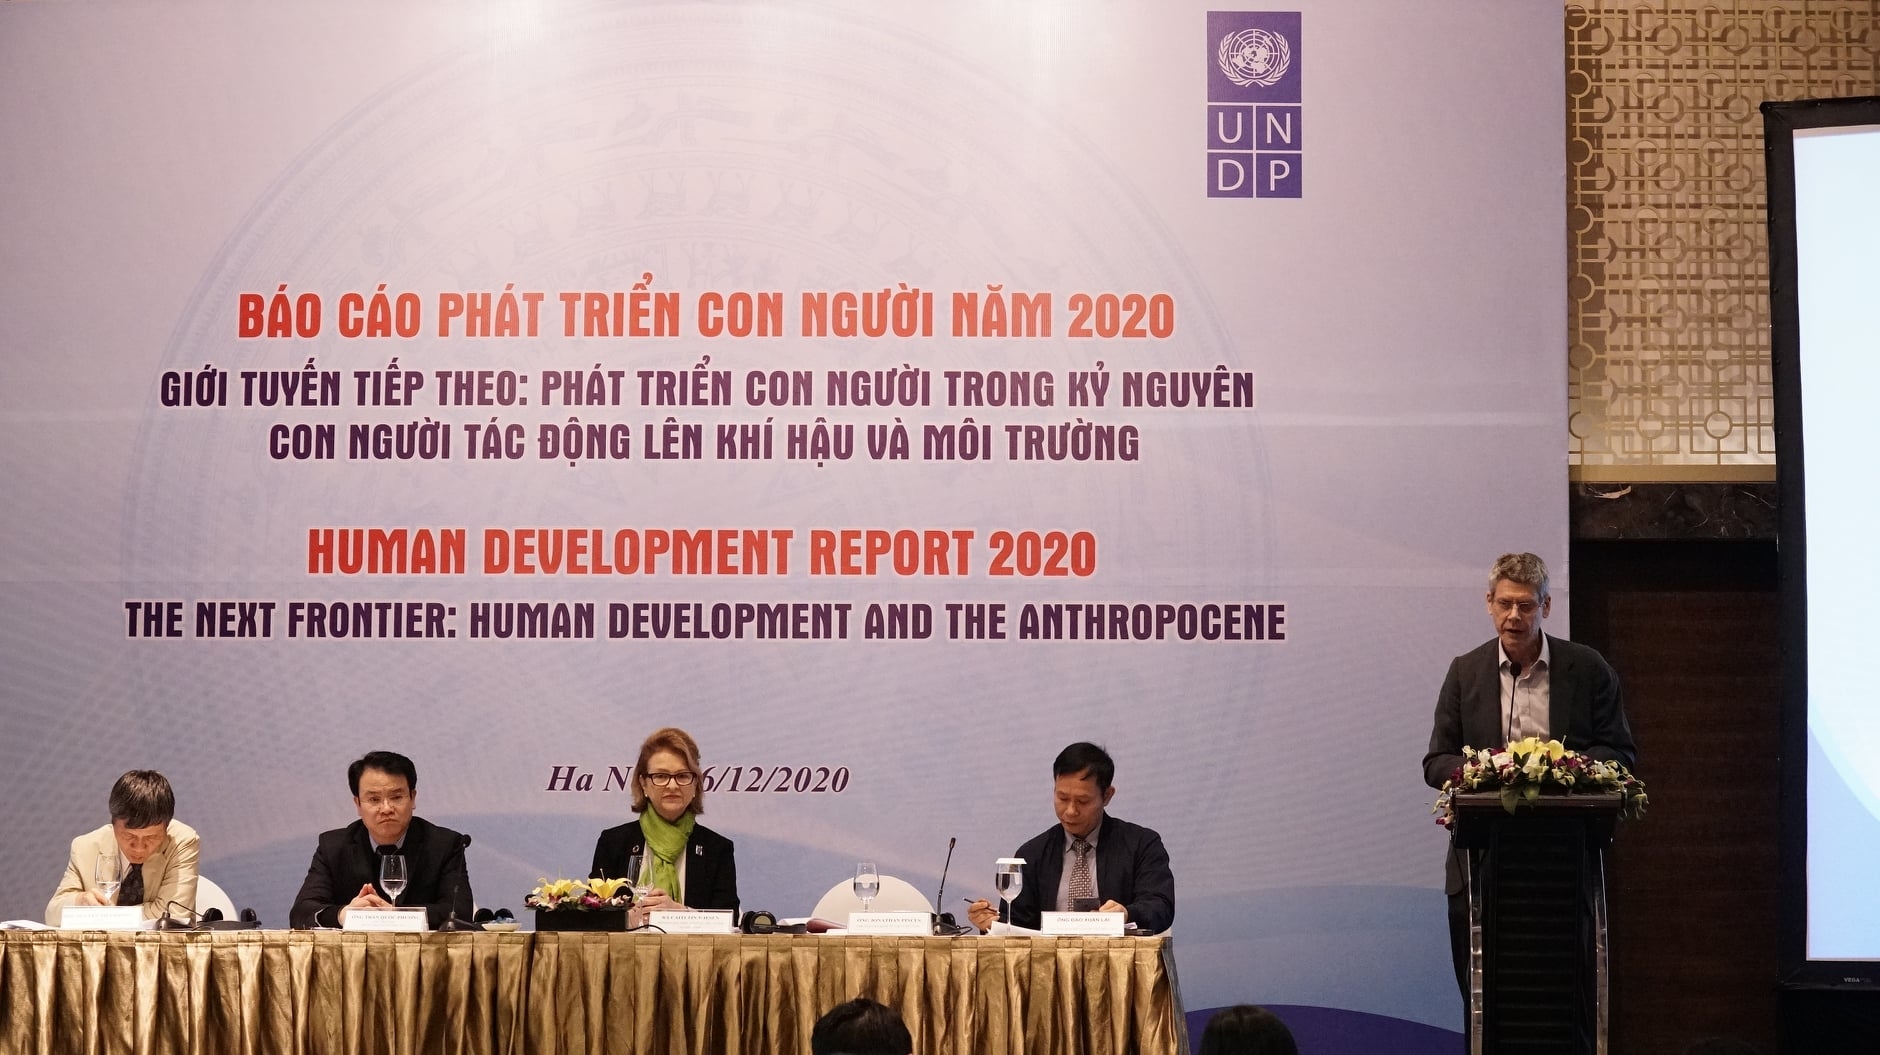 Vietnam climbs up in UN human development index rankings